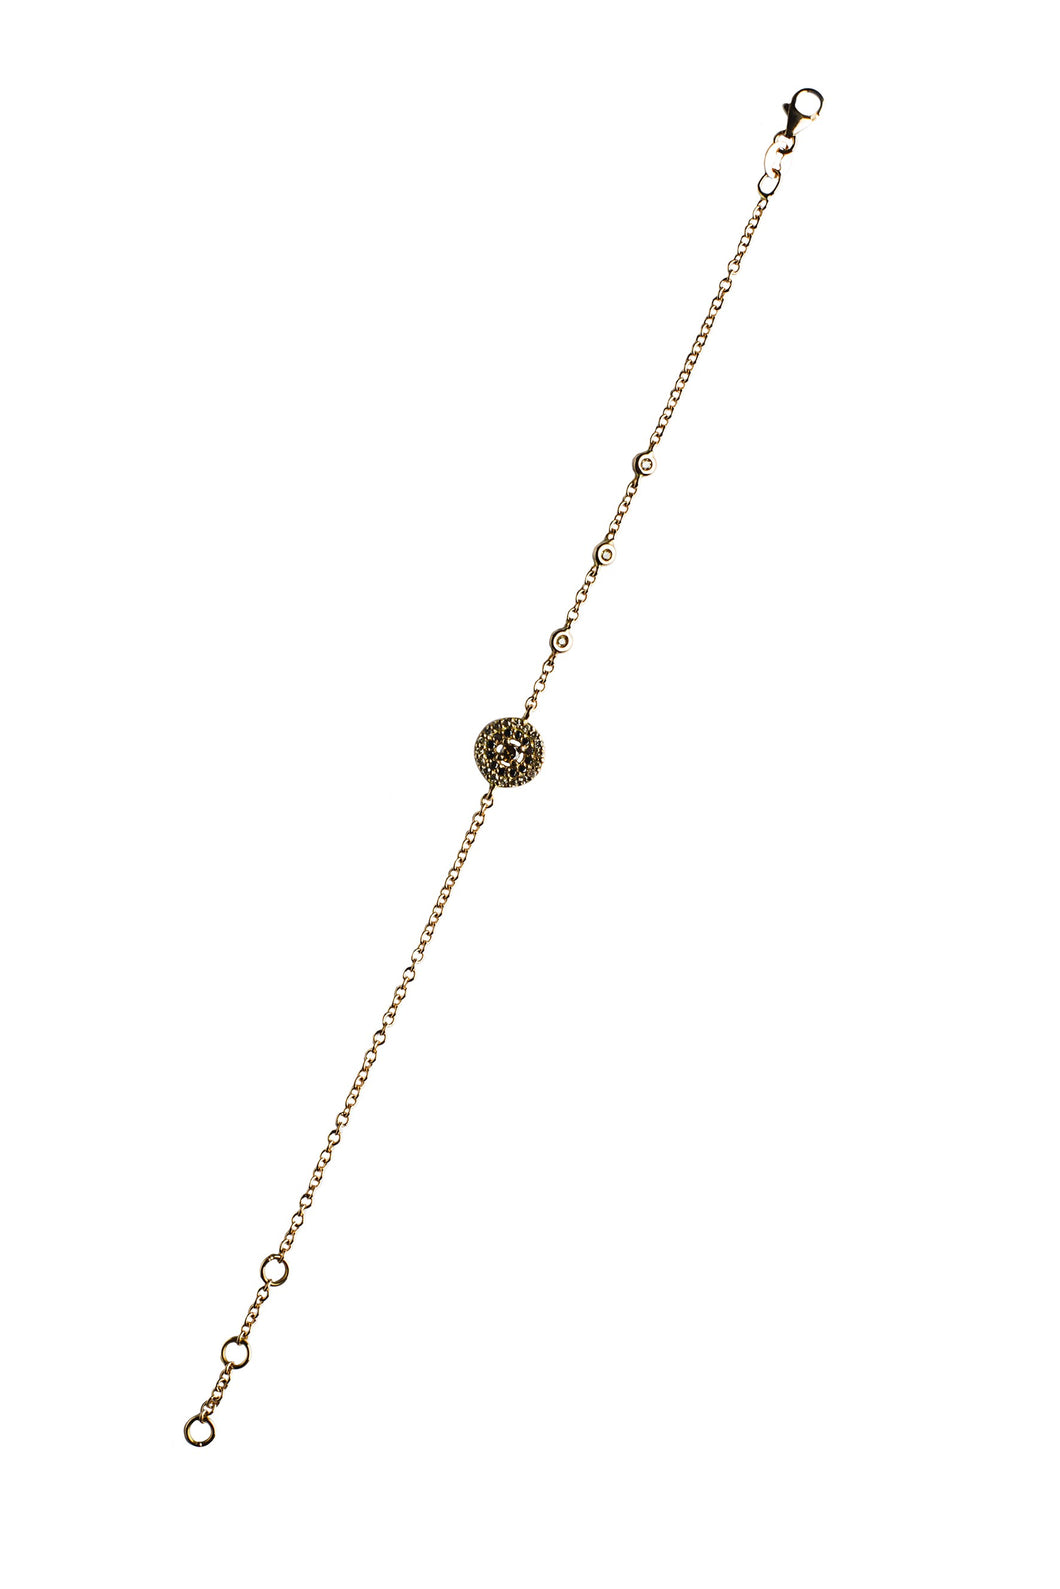 Mini round eye bracelet - rose gold chain